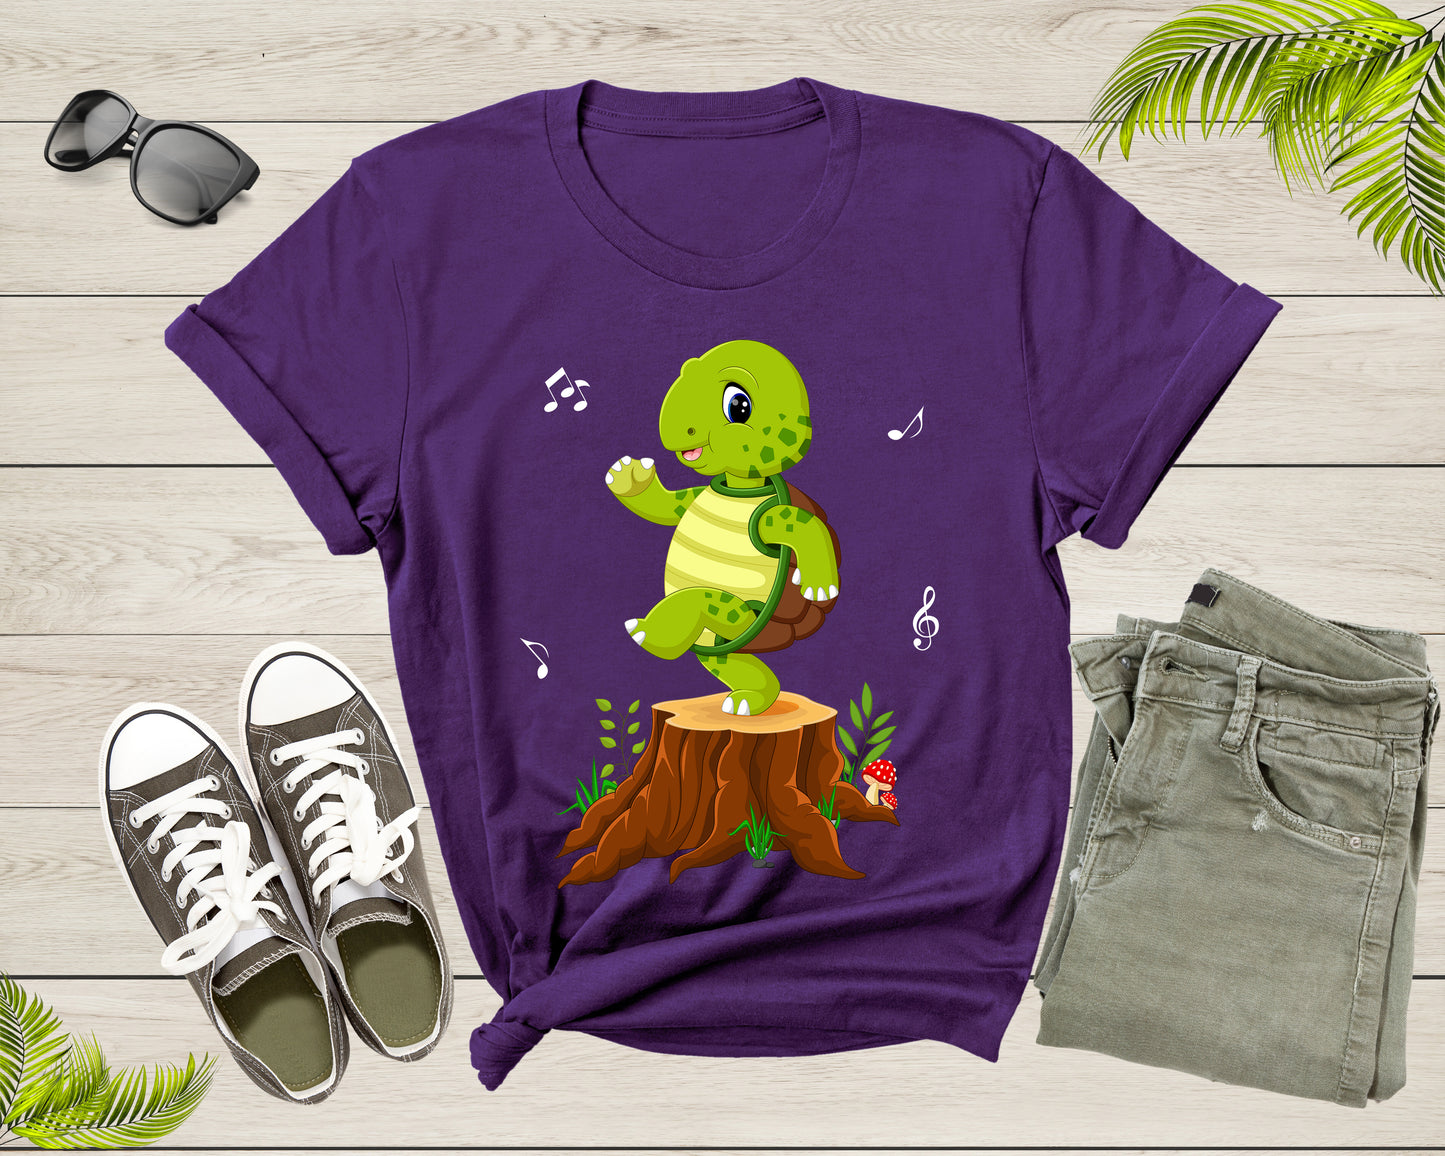 Cute Funny Green Dancing Turtle Tortoise on Brown Tree Root T-Shirt Turtle Lover Gift T Shirt for Men Women Kids Boys Girls Graphic Tshirt